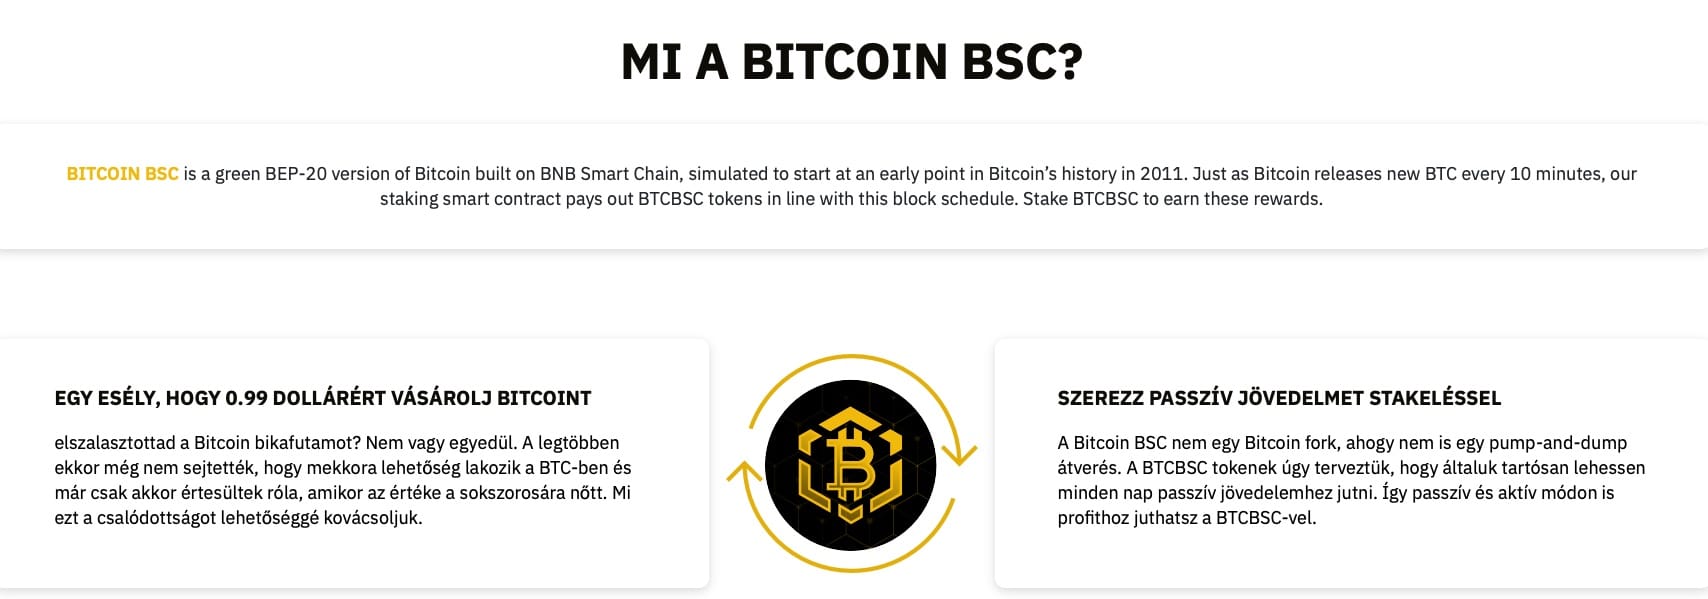 BTCBSC bitcoin bsc